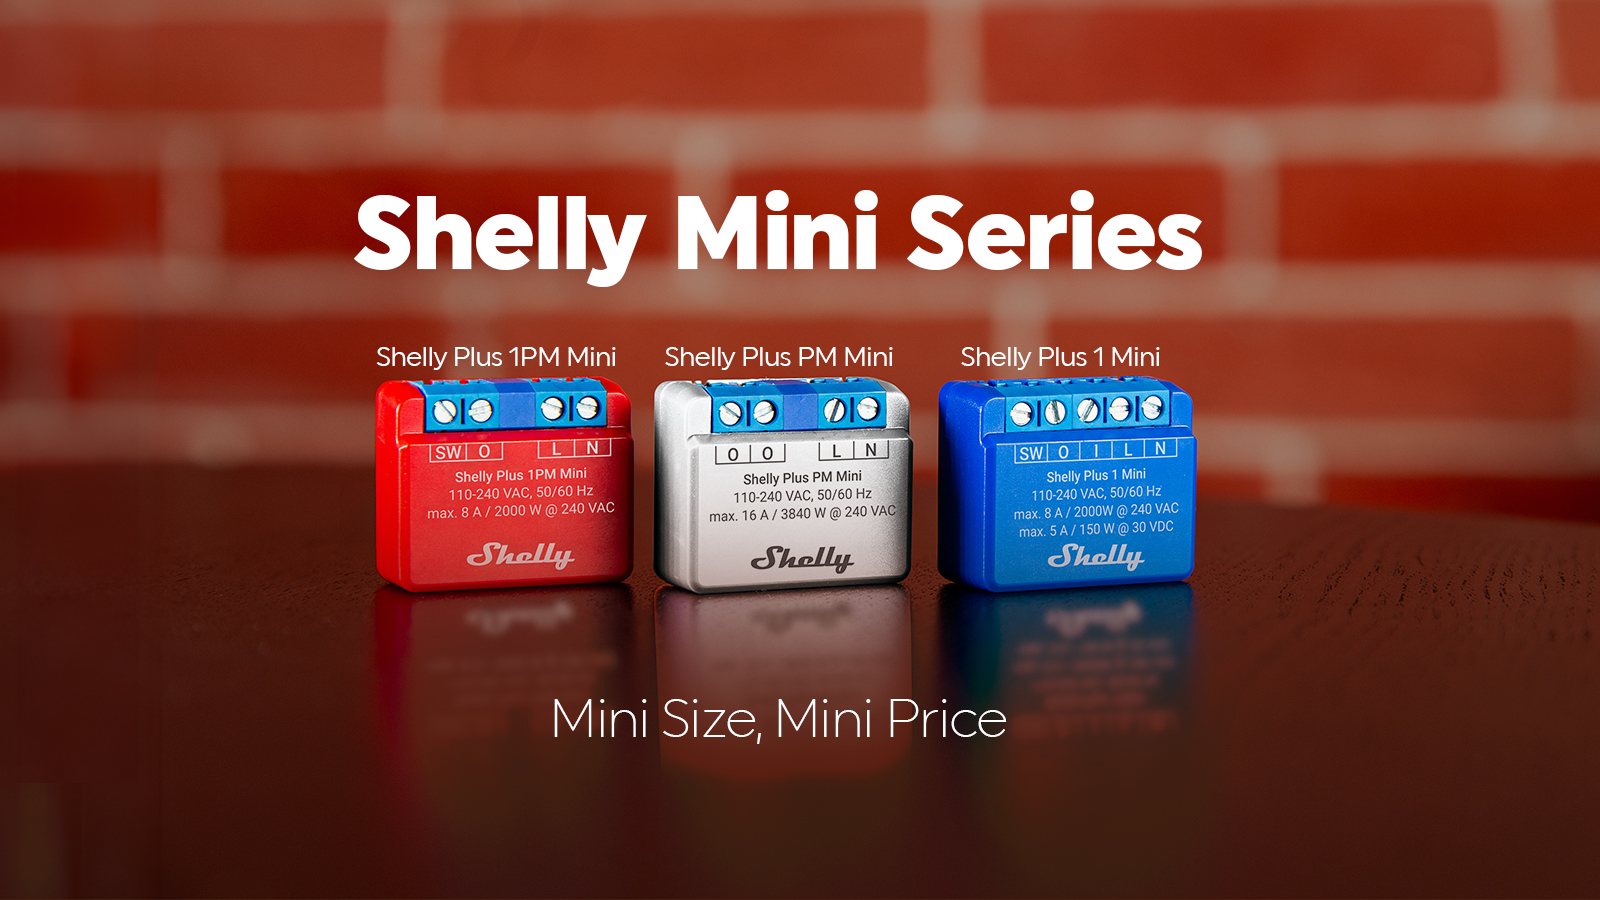 Shelly Plus PM Mini